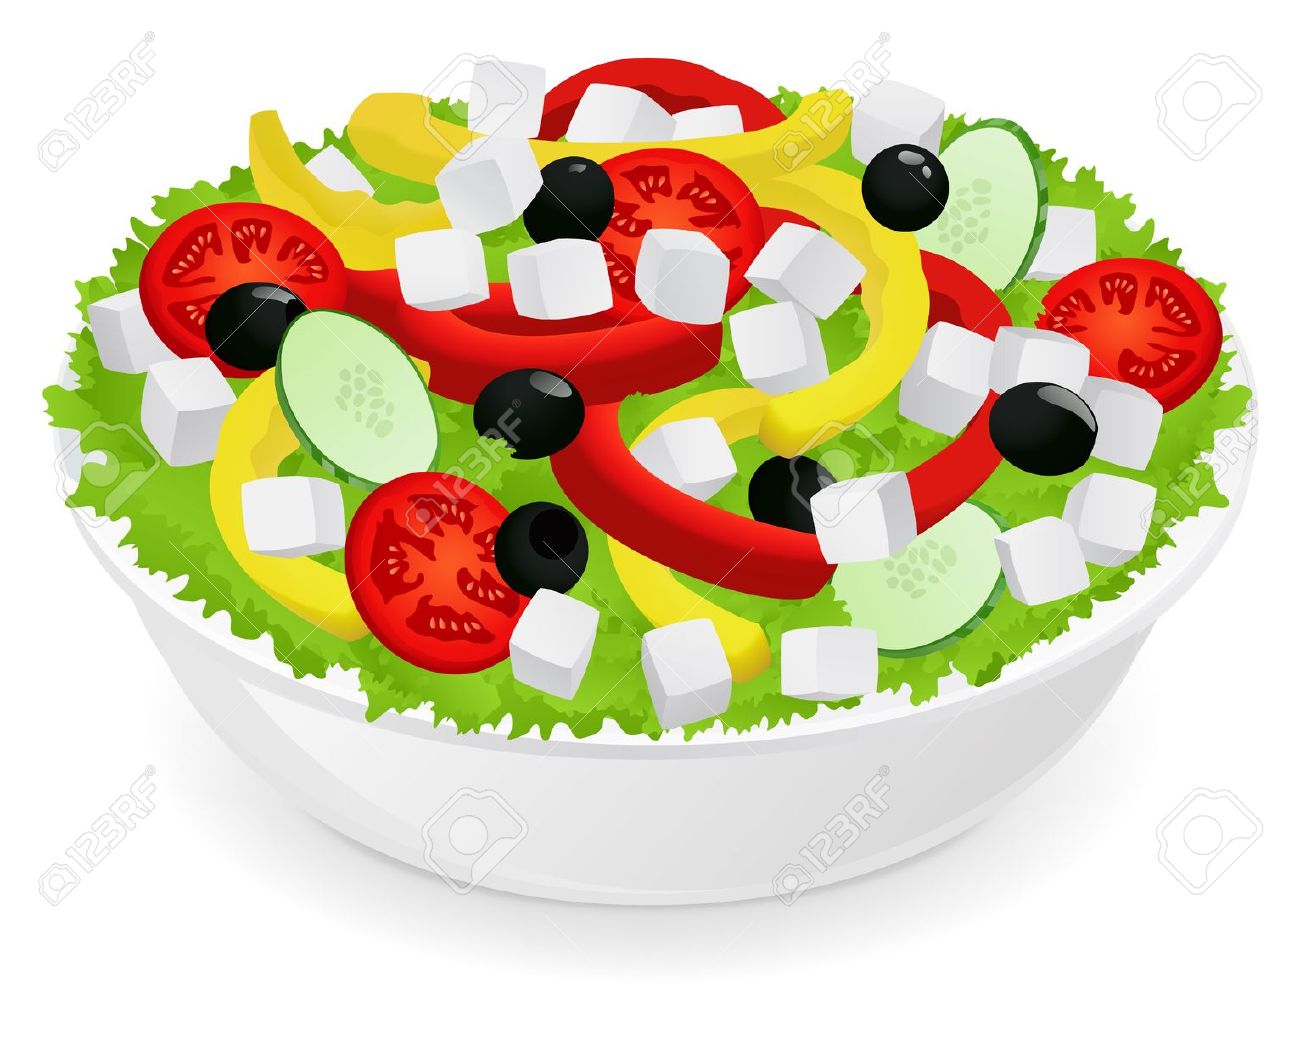 fruit salad clipart free - photo #49